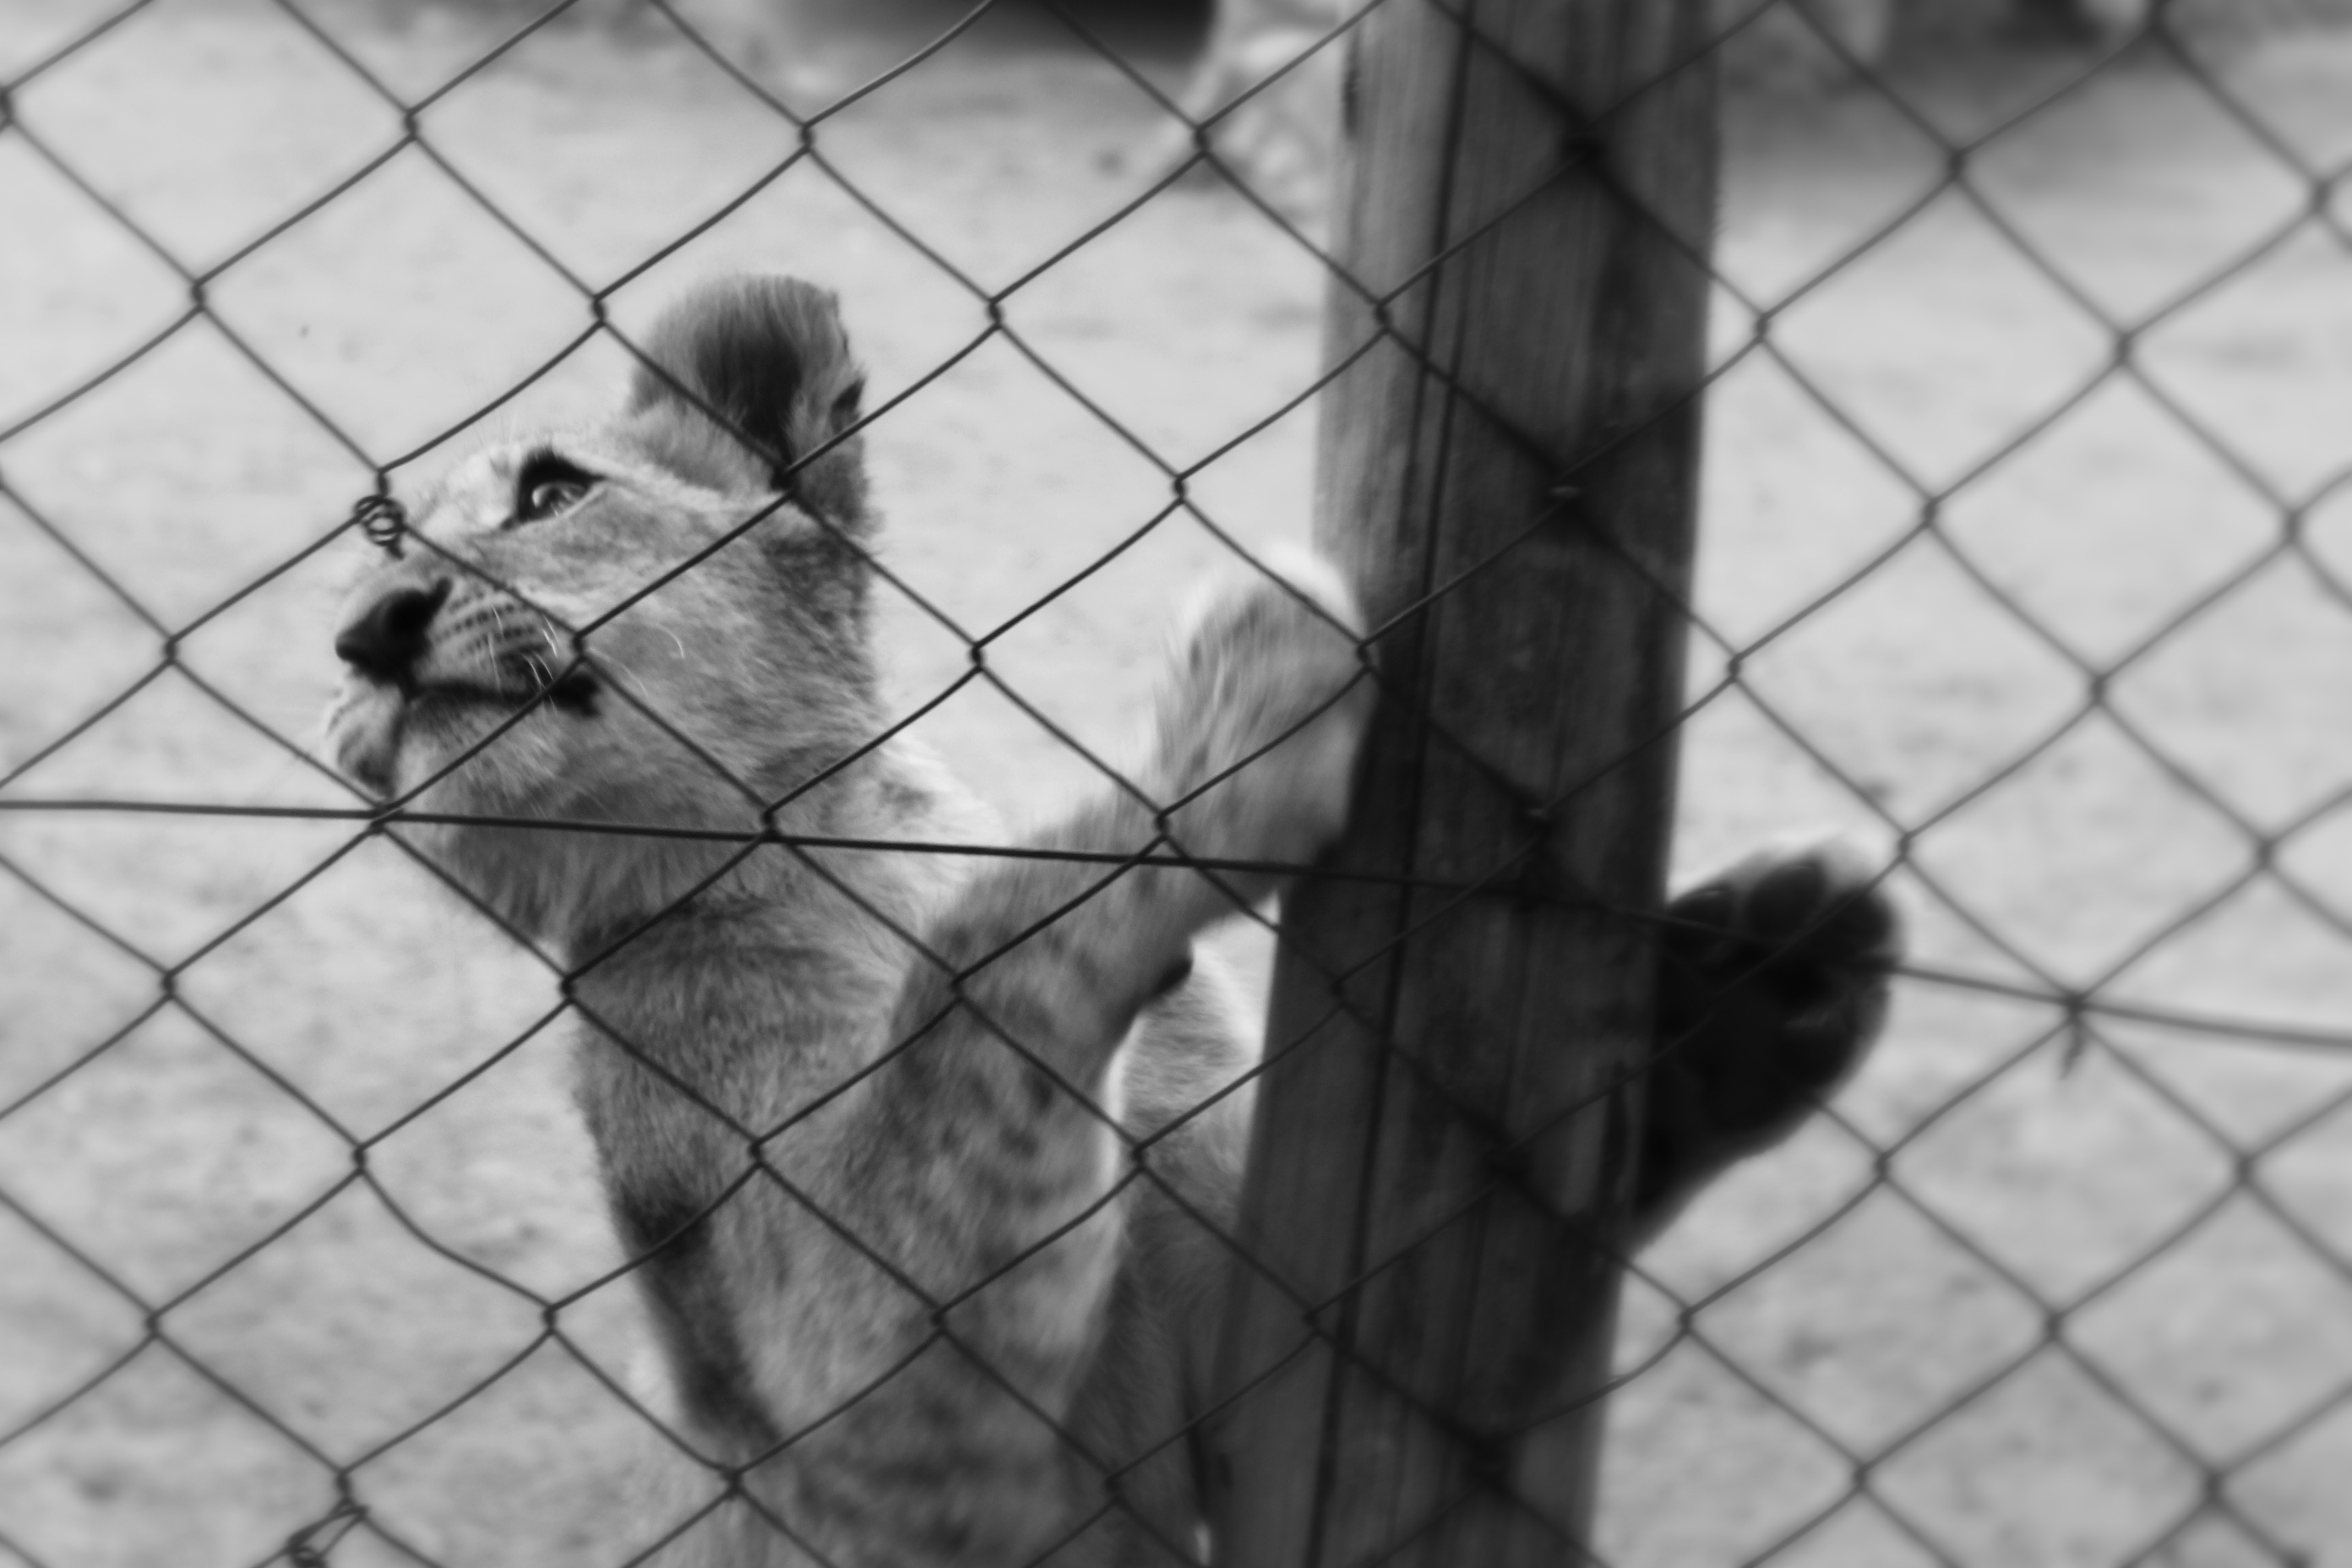 Caged lion cub